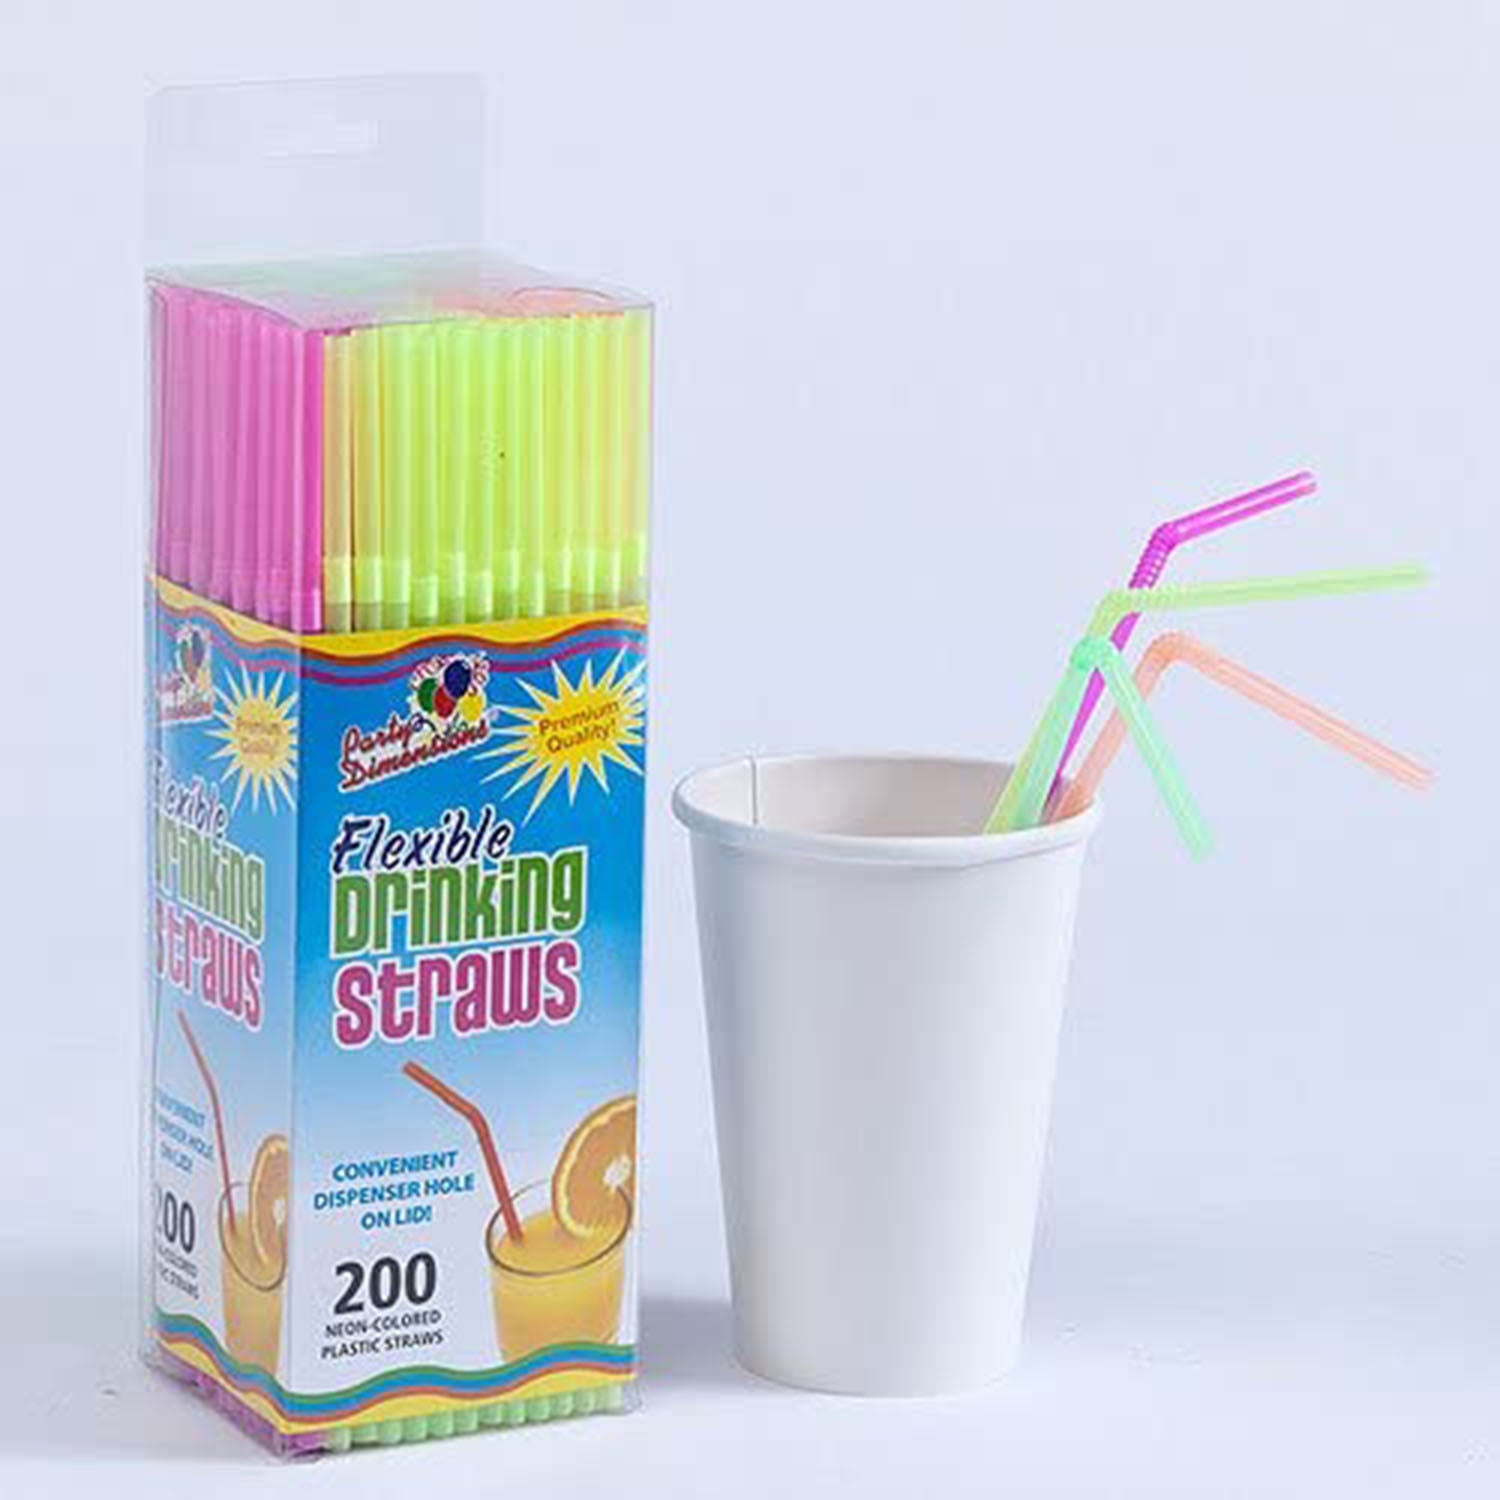 Plastic Straws, 200 Packs Of Straws Drinking Plastic Straws